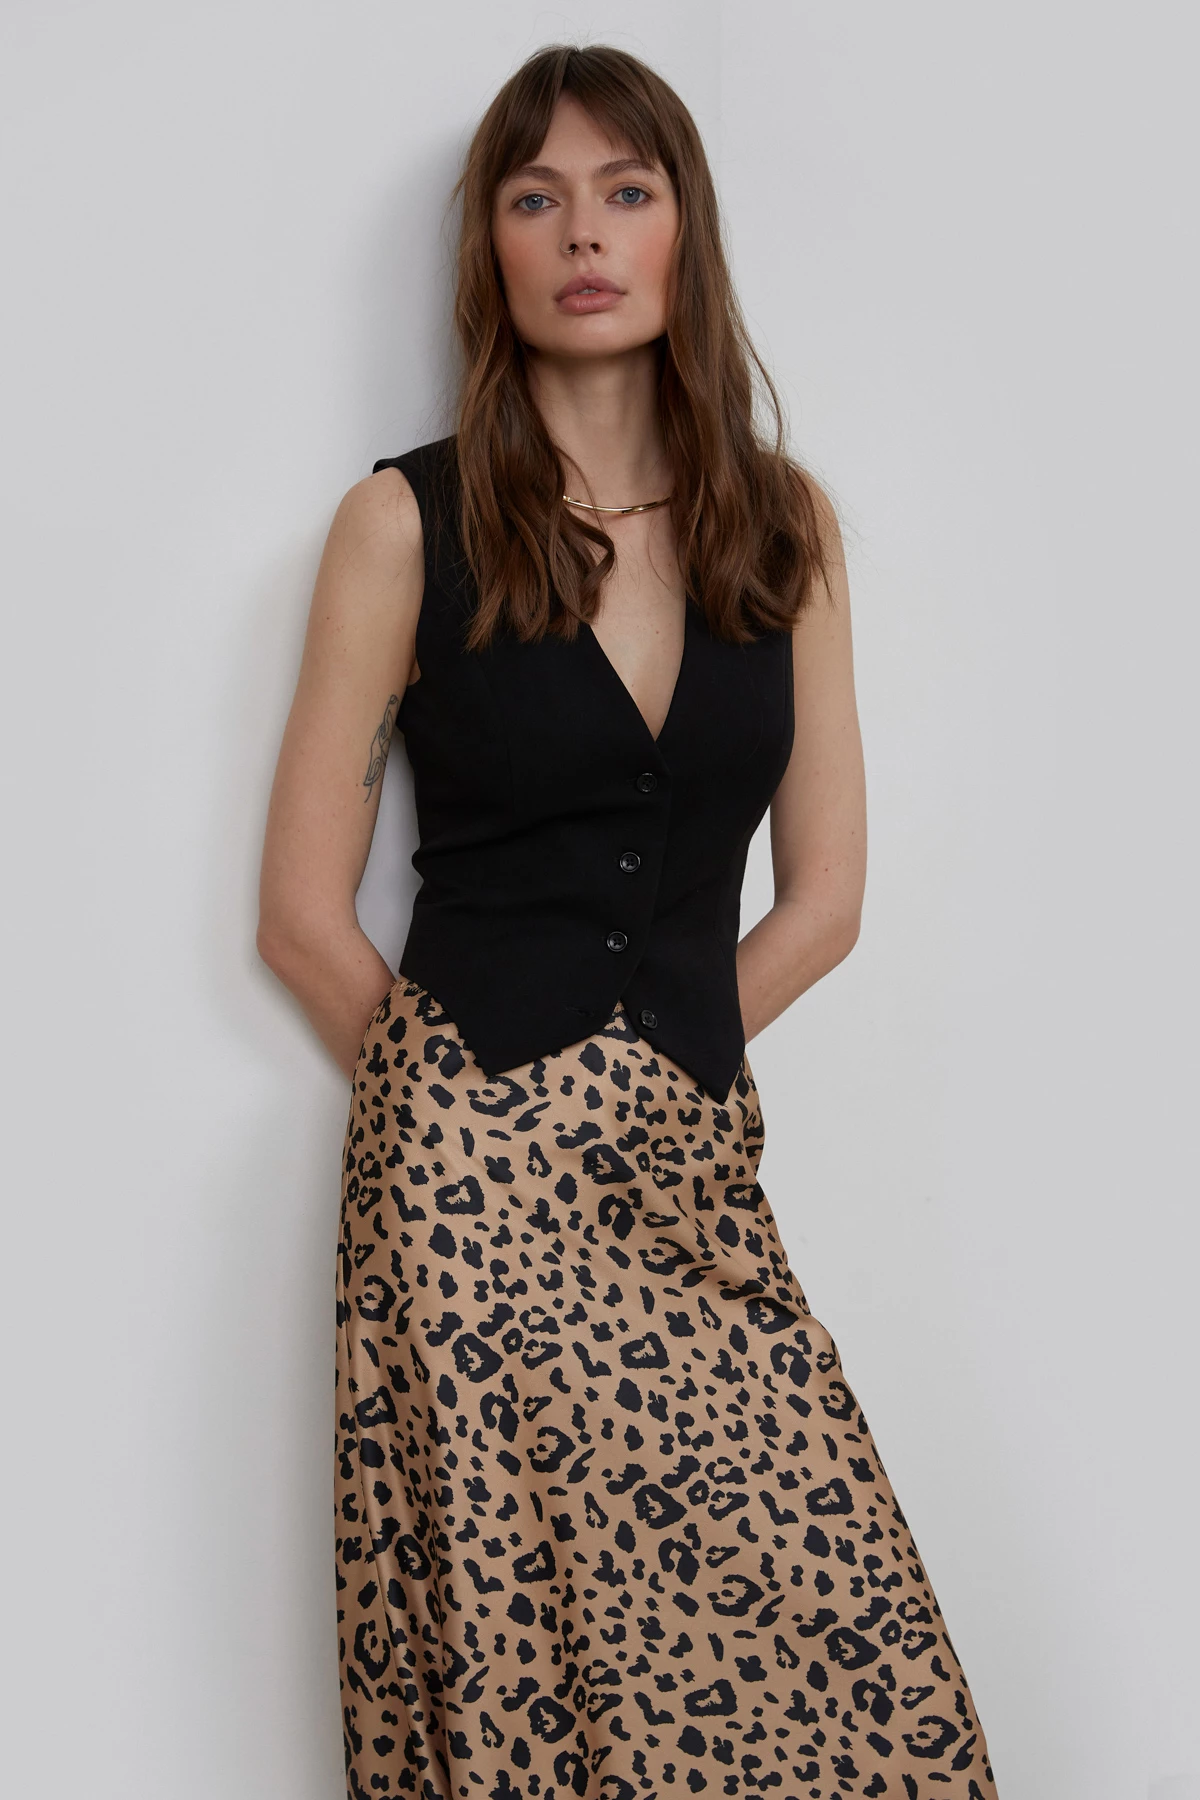 Mid-length satin skirt in leopard print, photo 2